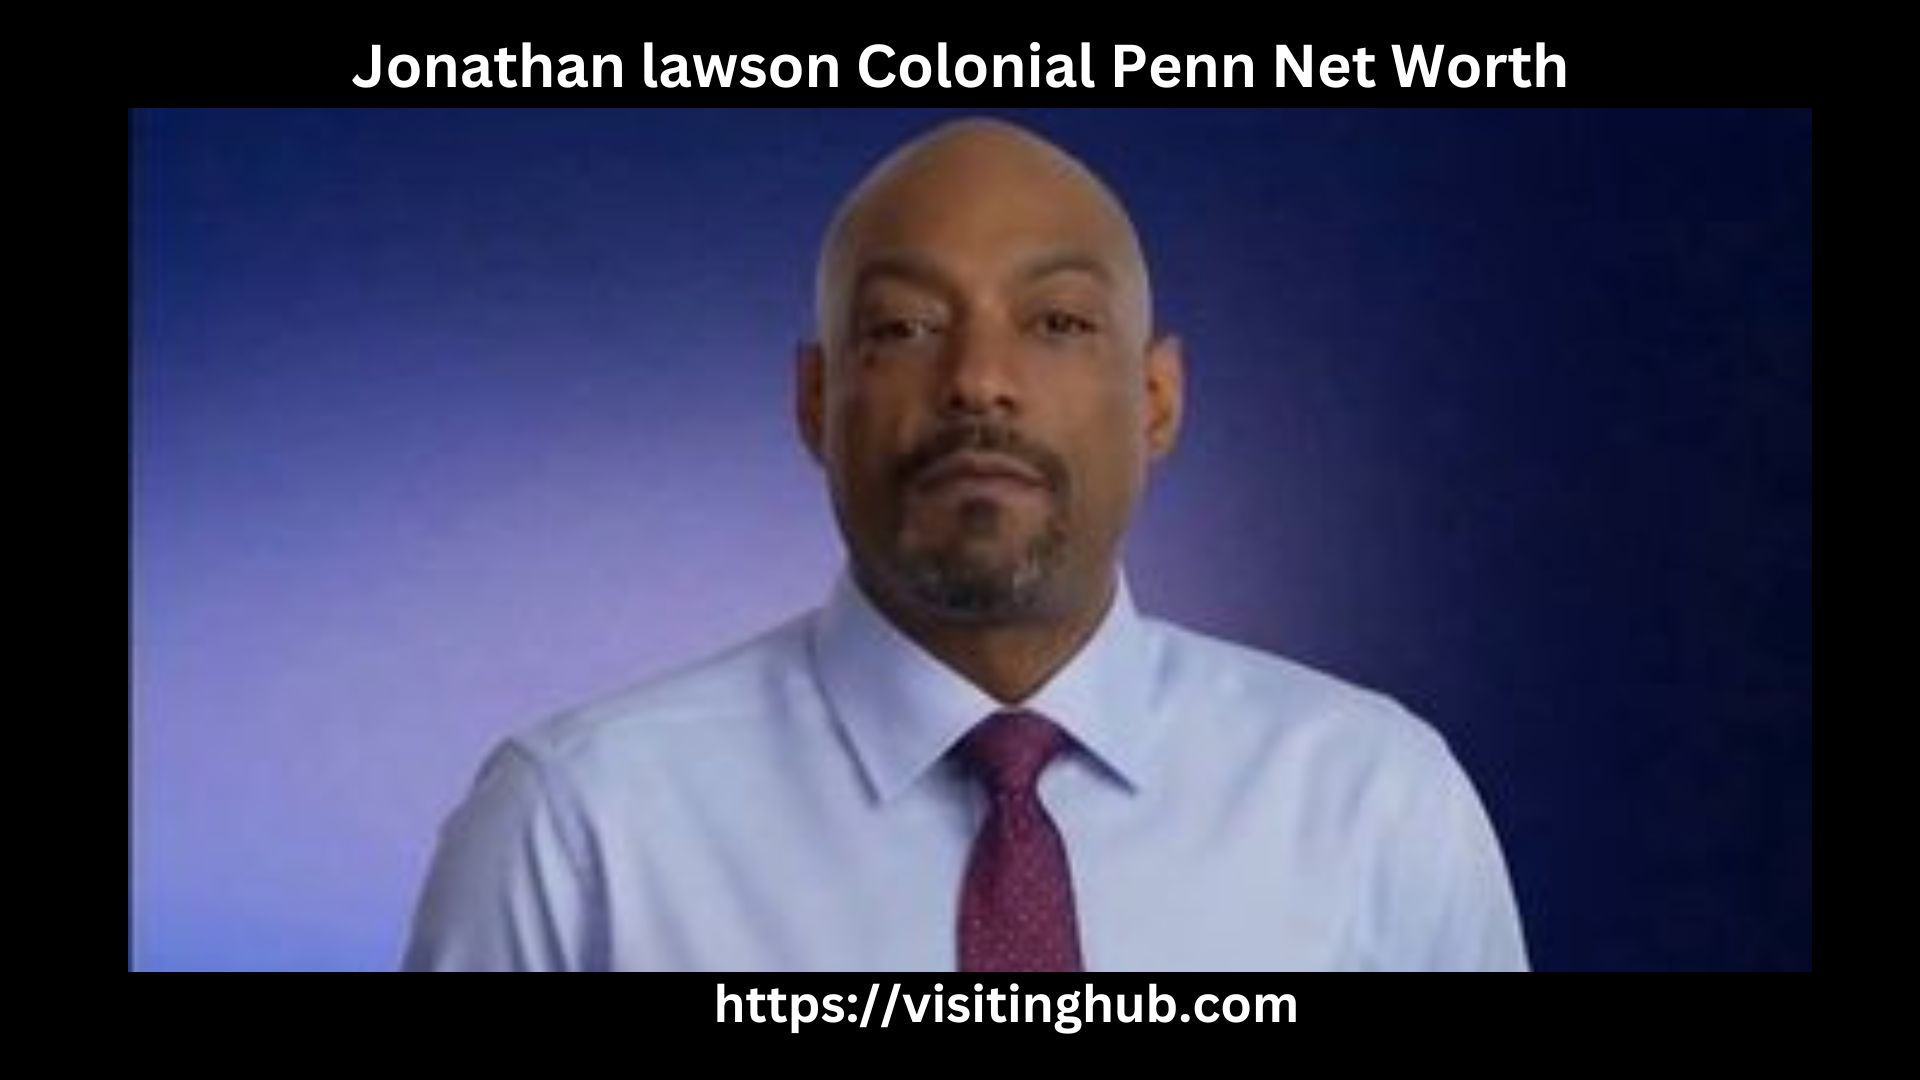 Jonathan lawson Colonial Penn Net Worth